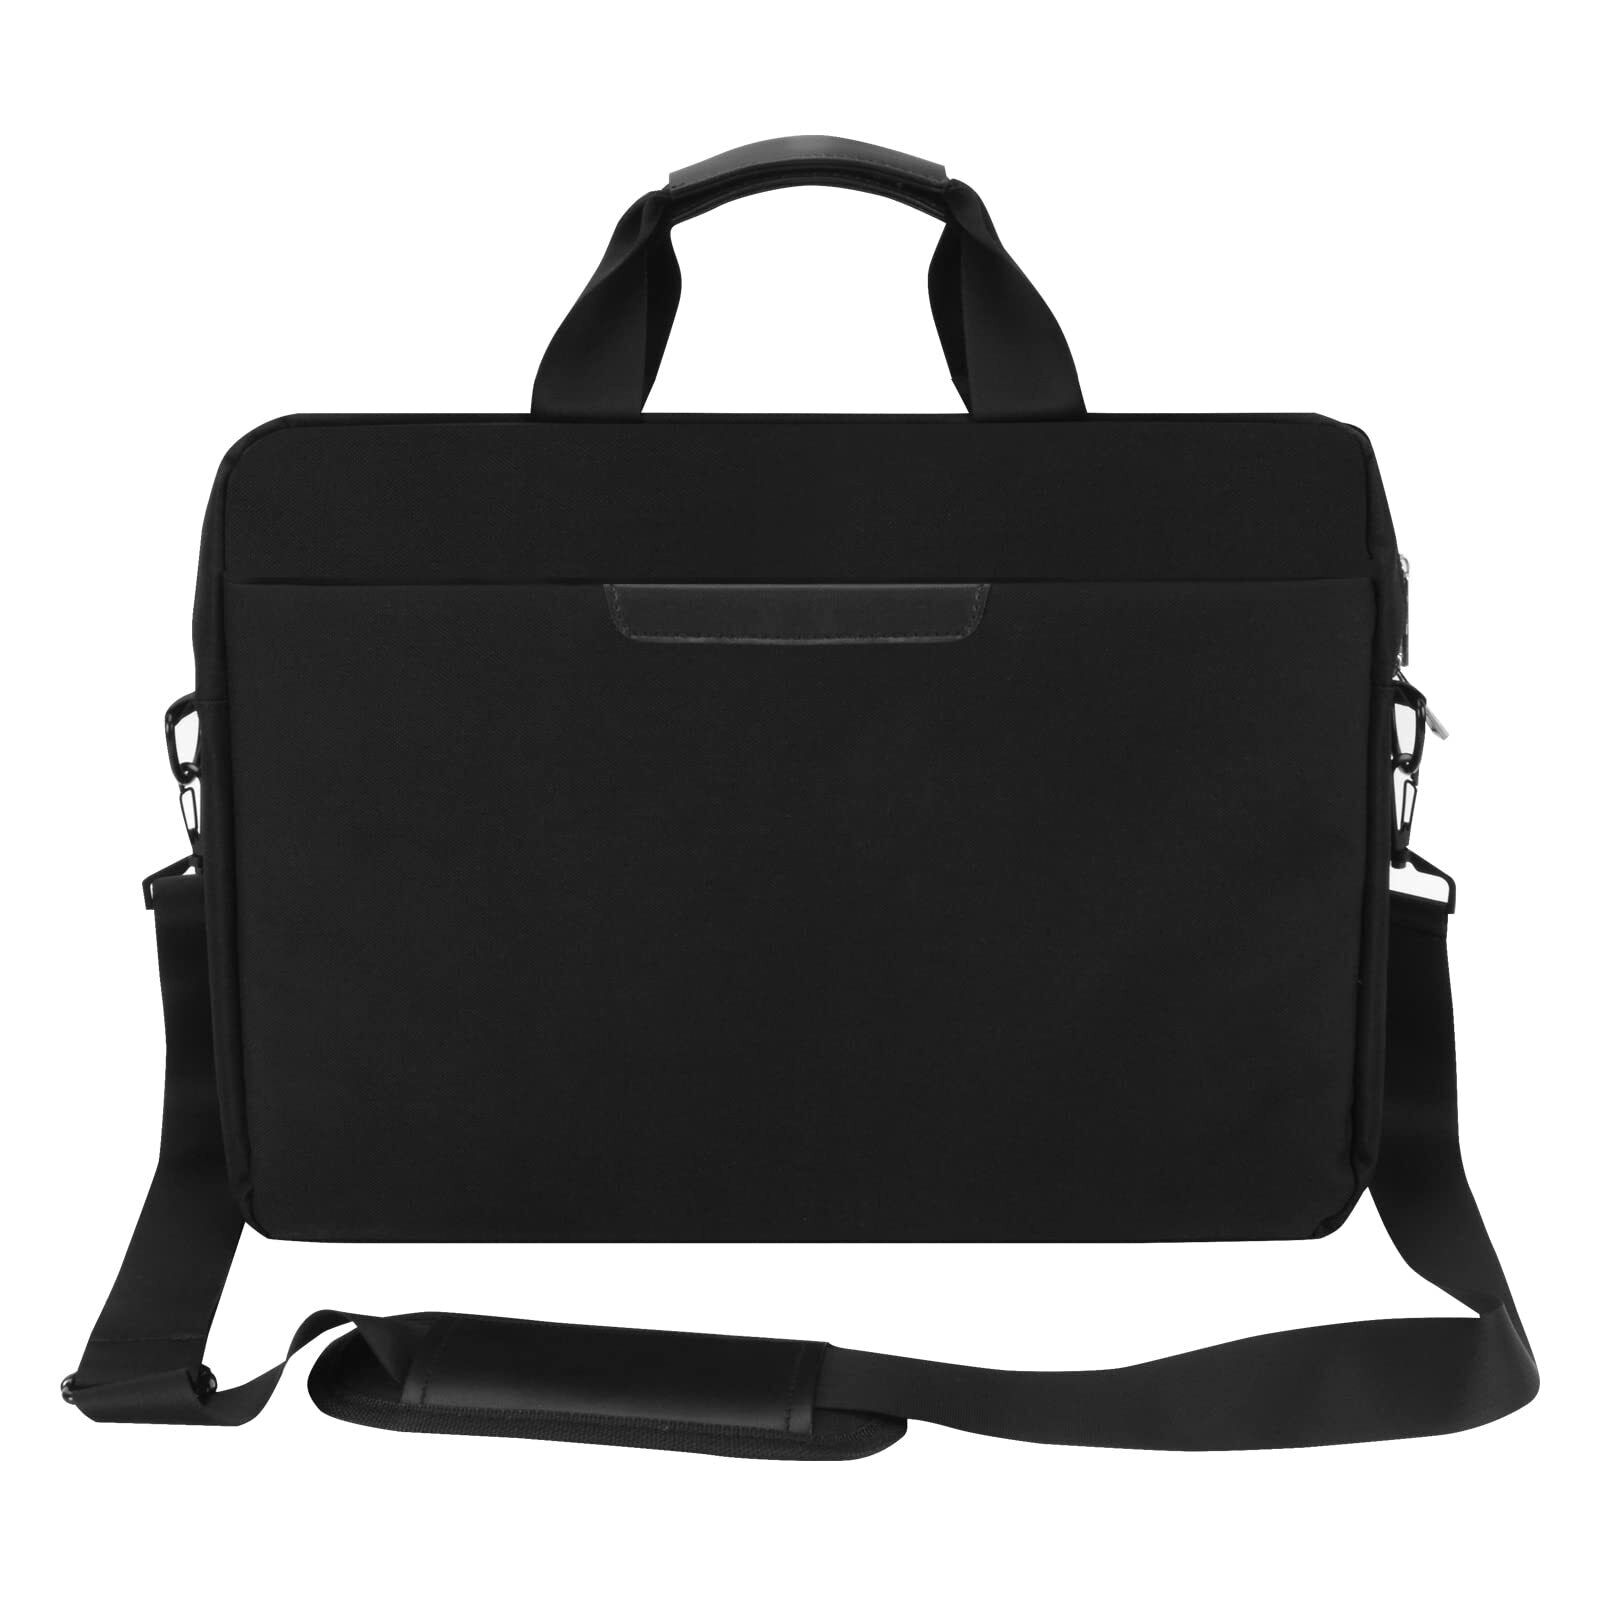 Premium Black Large Size17.318.4 Inch Laptop Briefcase With Crossbody Shoulder B